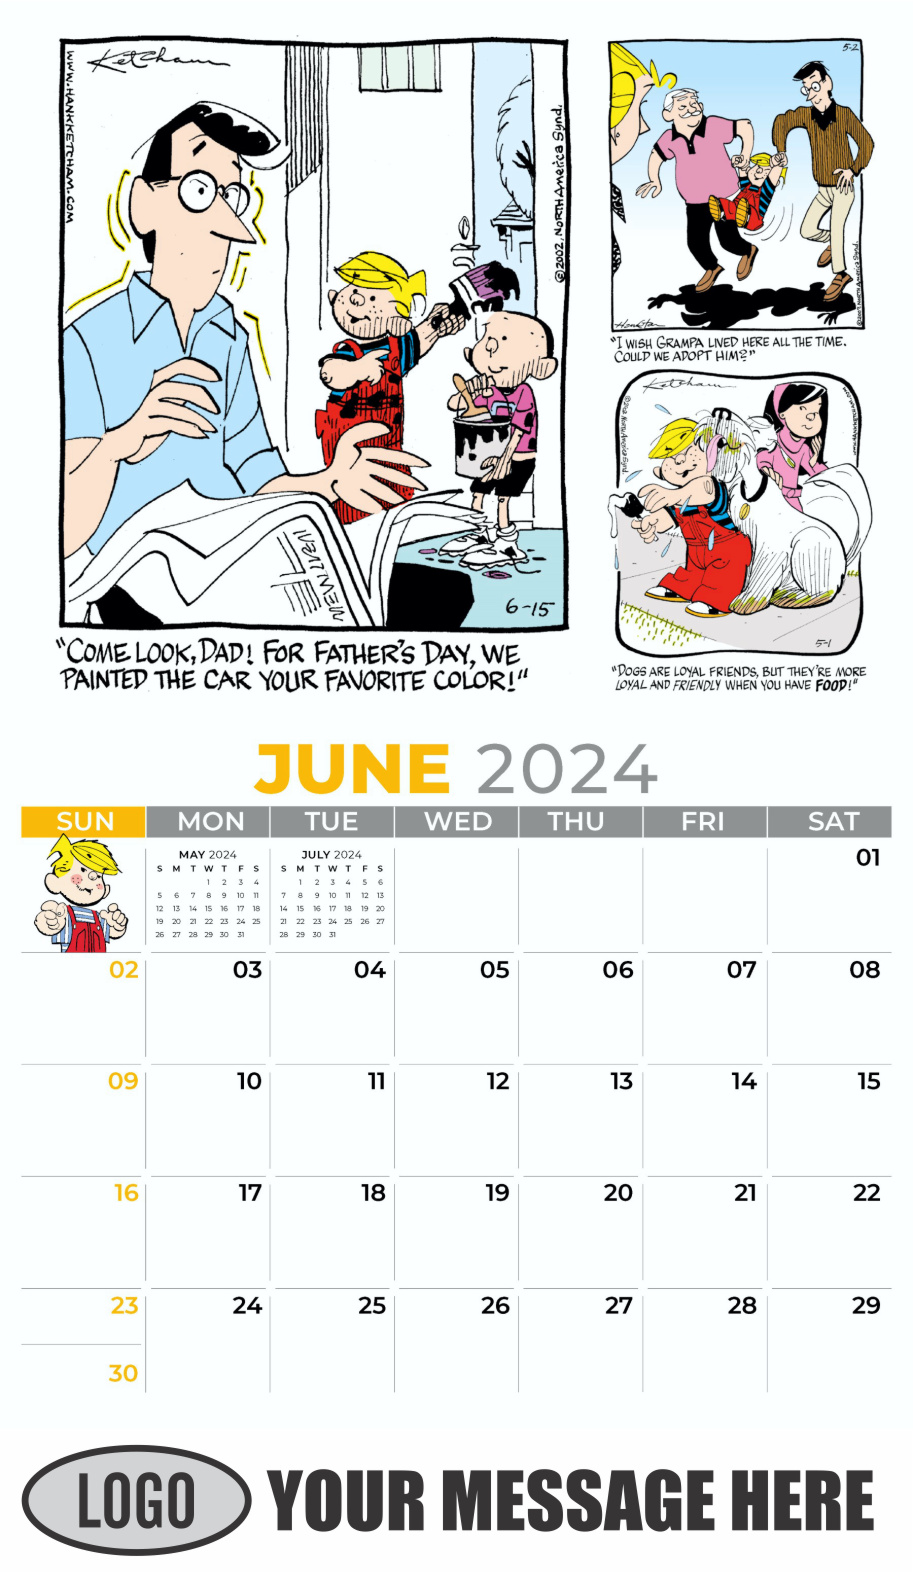 Dennis the Menace 2024 Business Promotional Wall Calendar - June